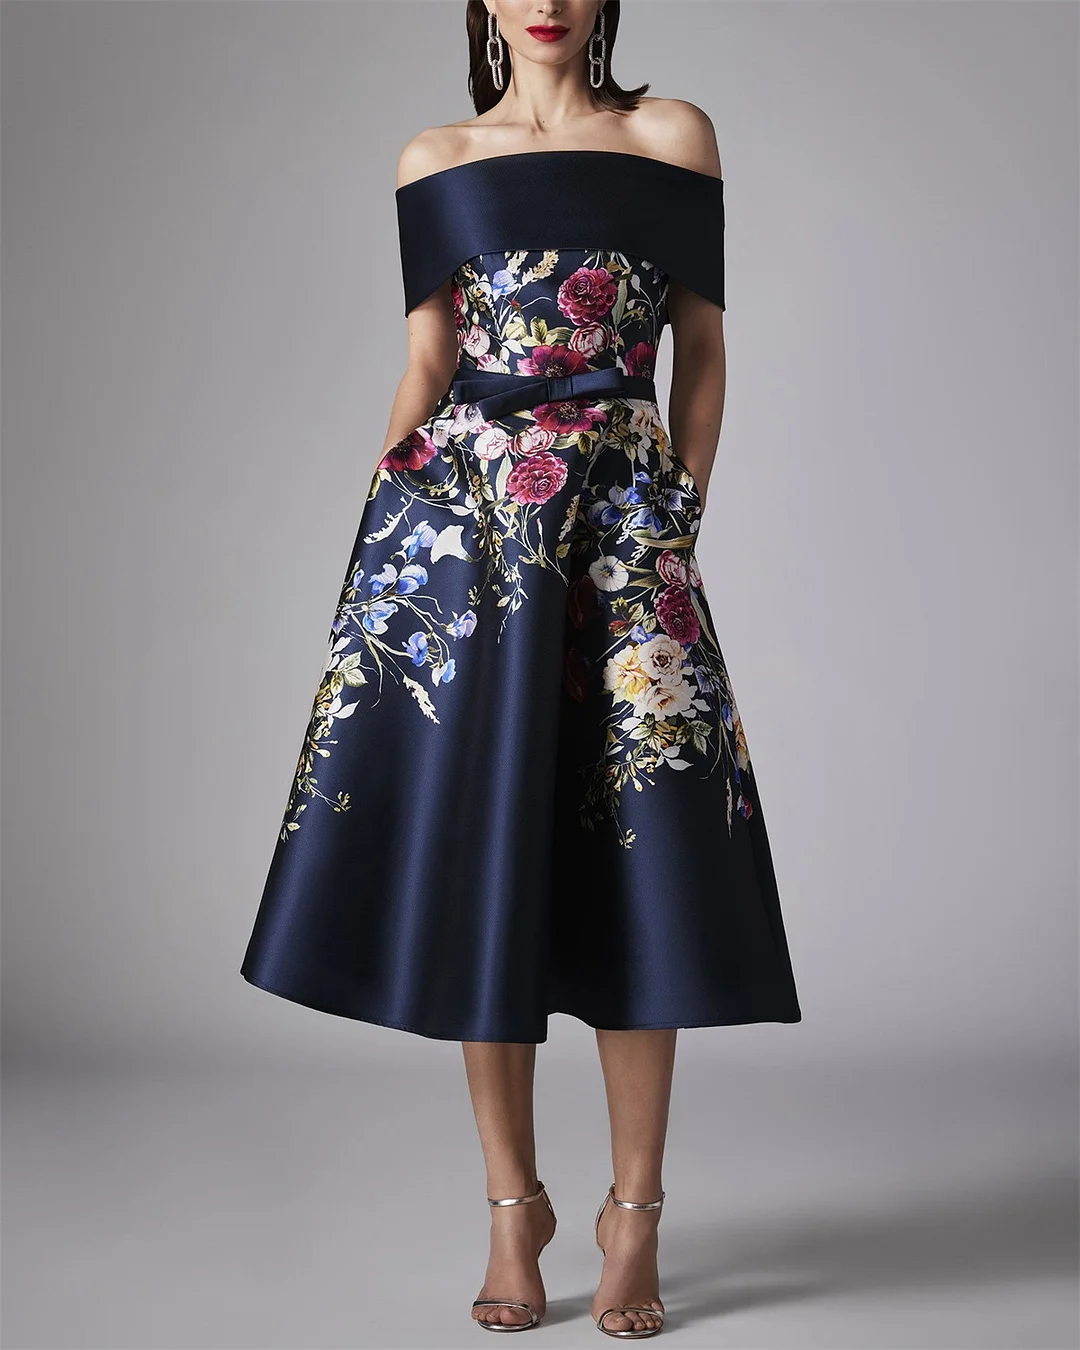 Women's Off Shoulder Flower Embroidery Dress